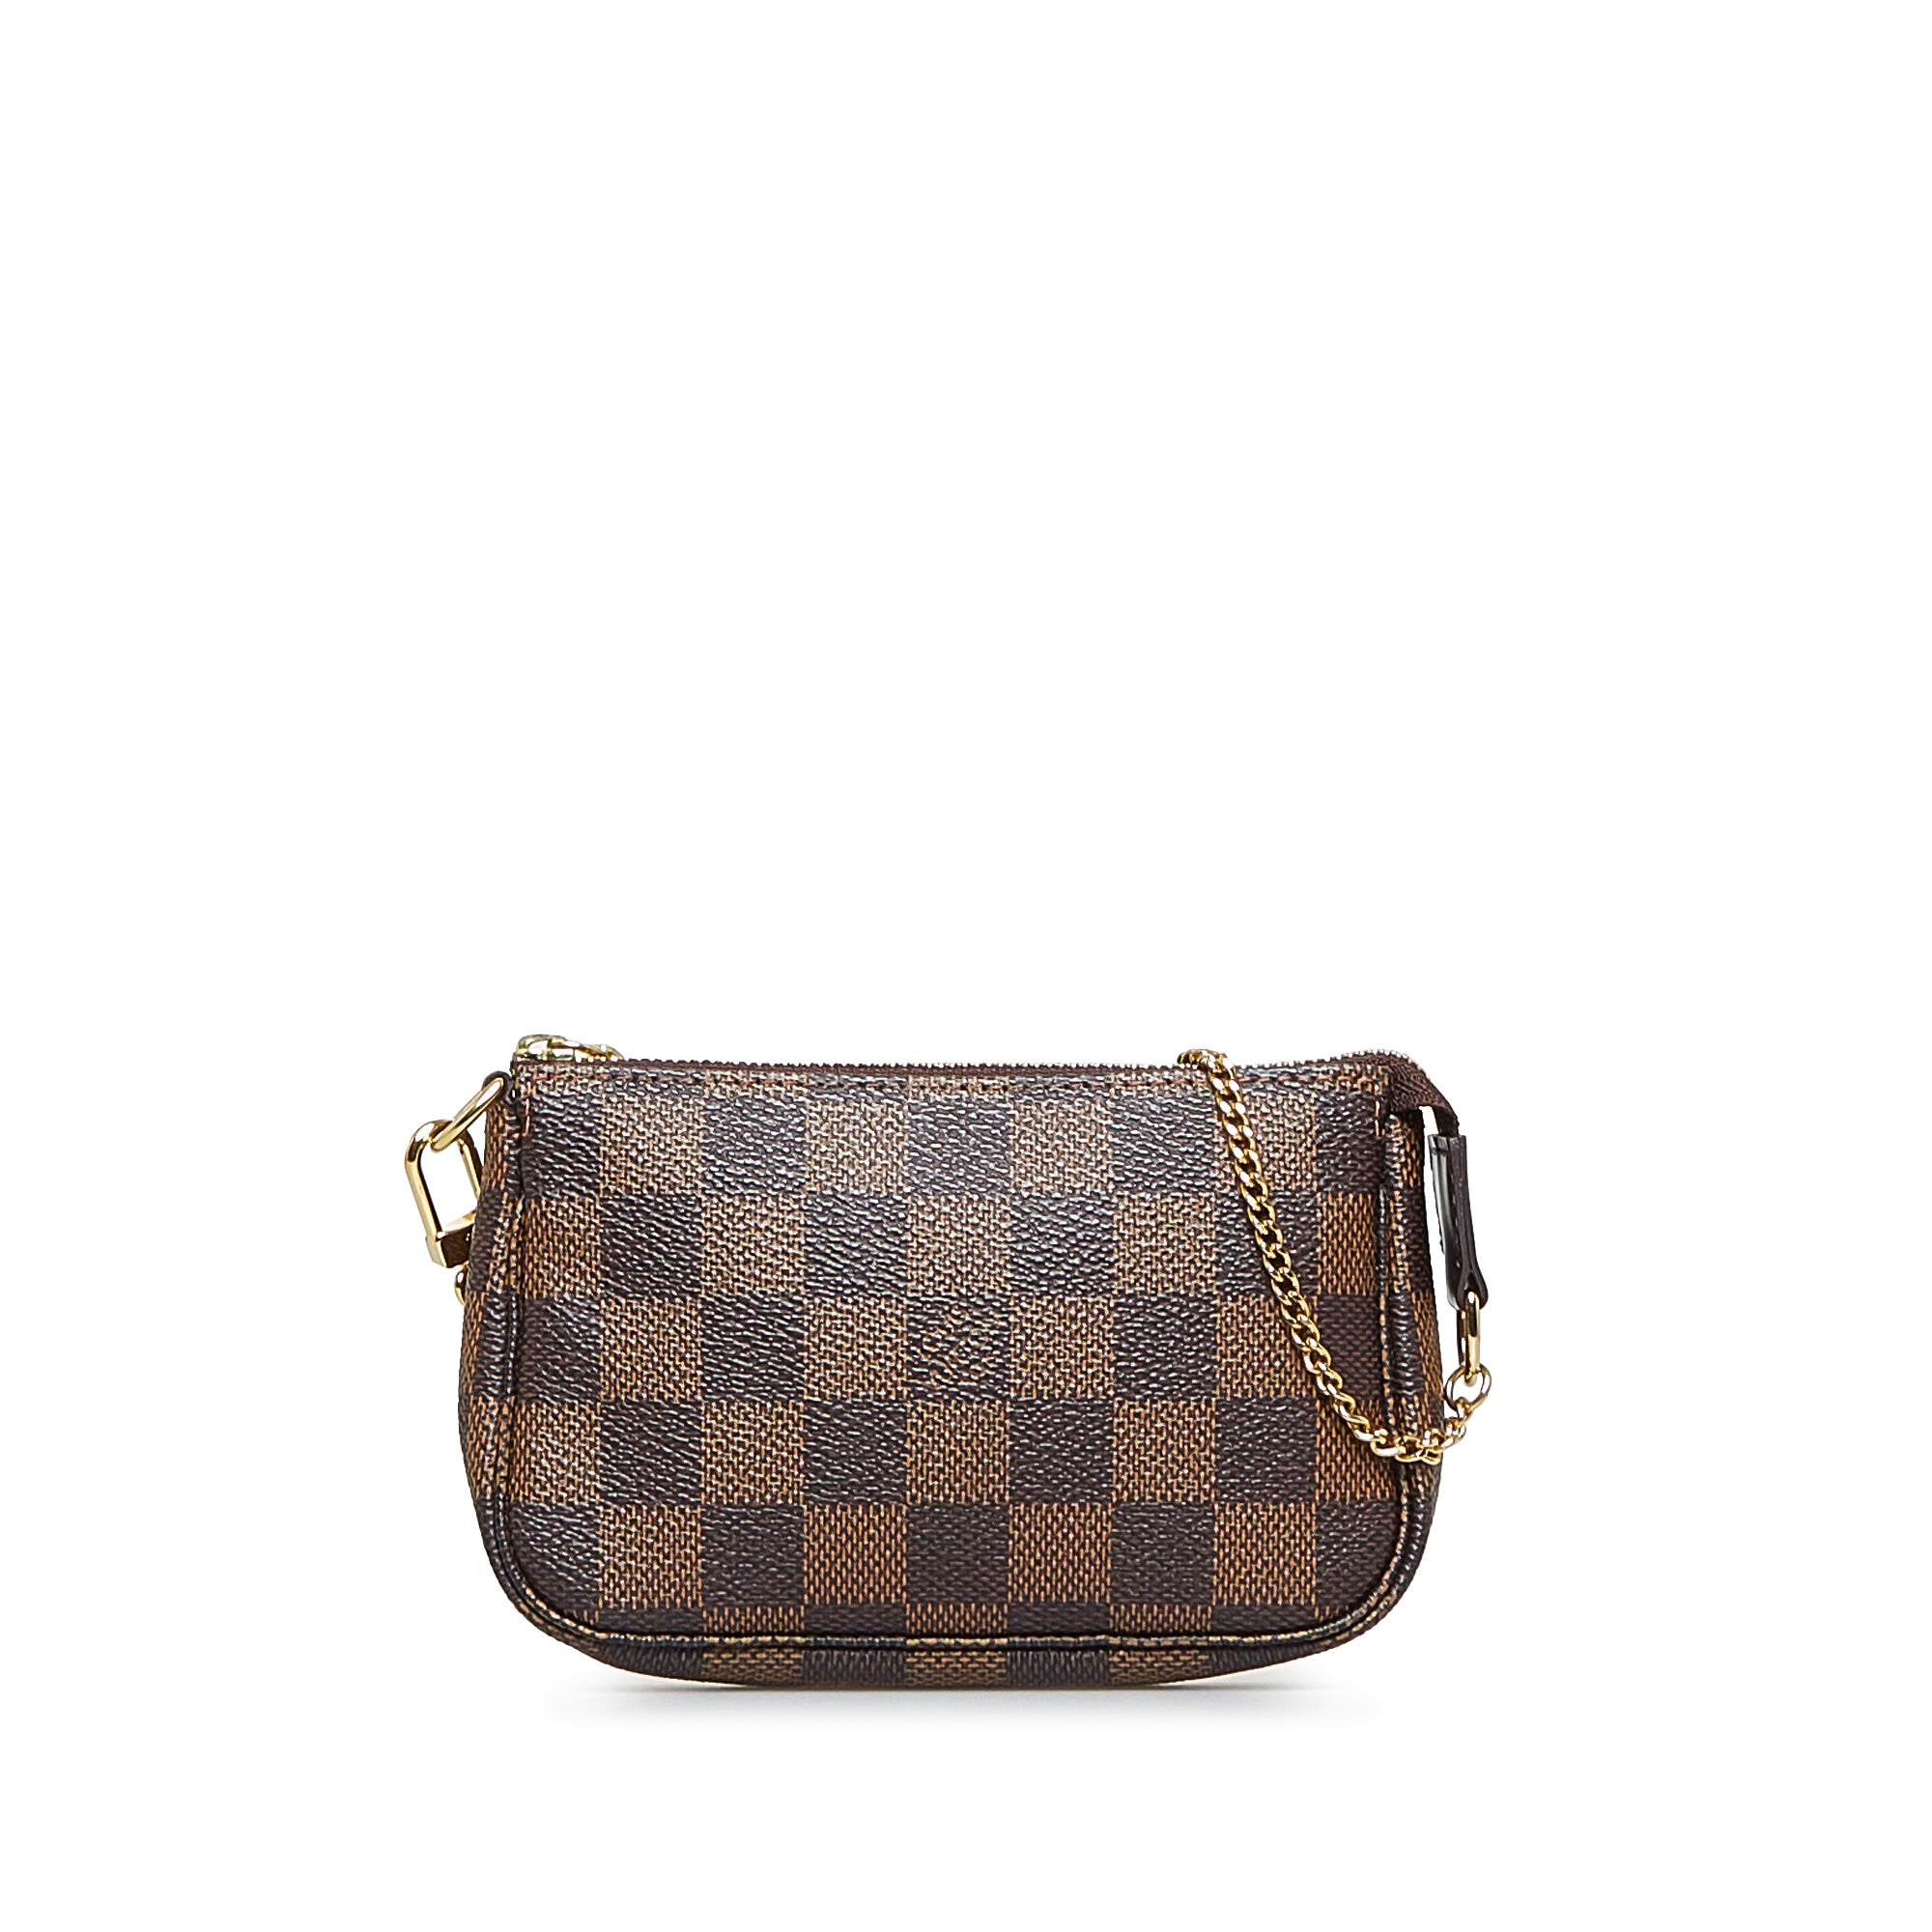 Mini pochette accessories  Bags, Louis vuitton key pouch, Handbag  essentials